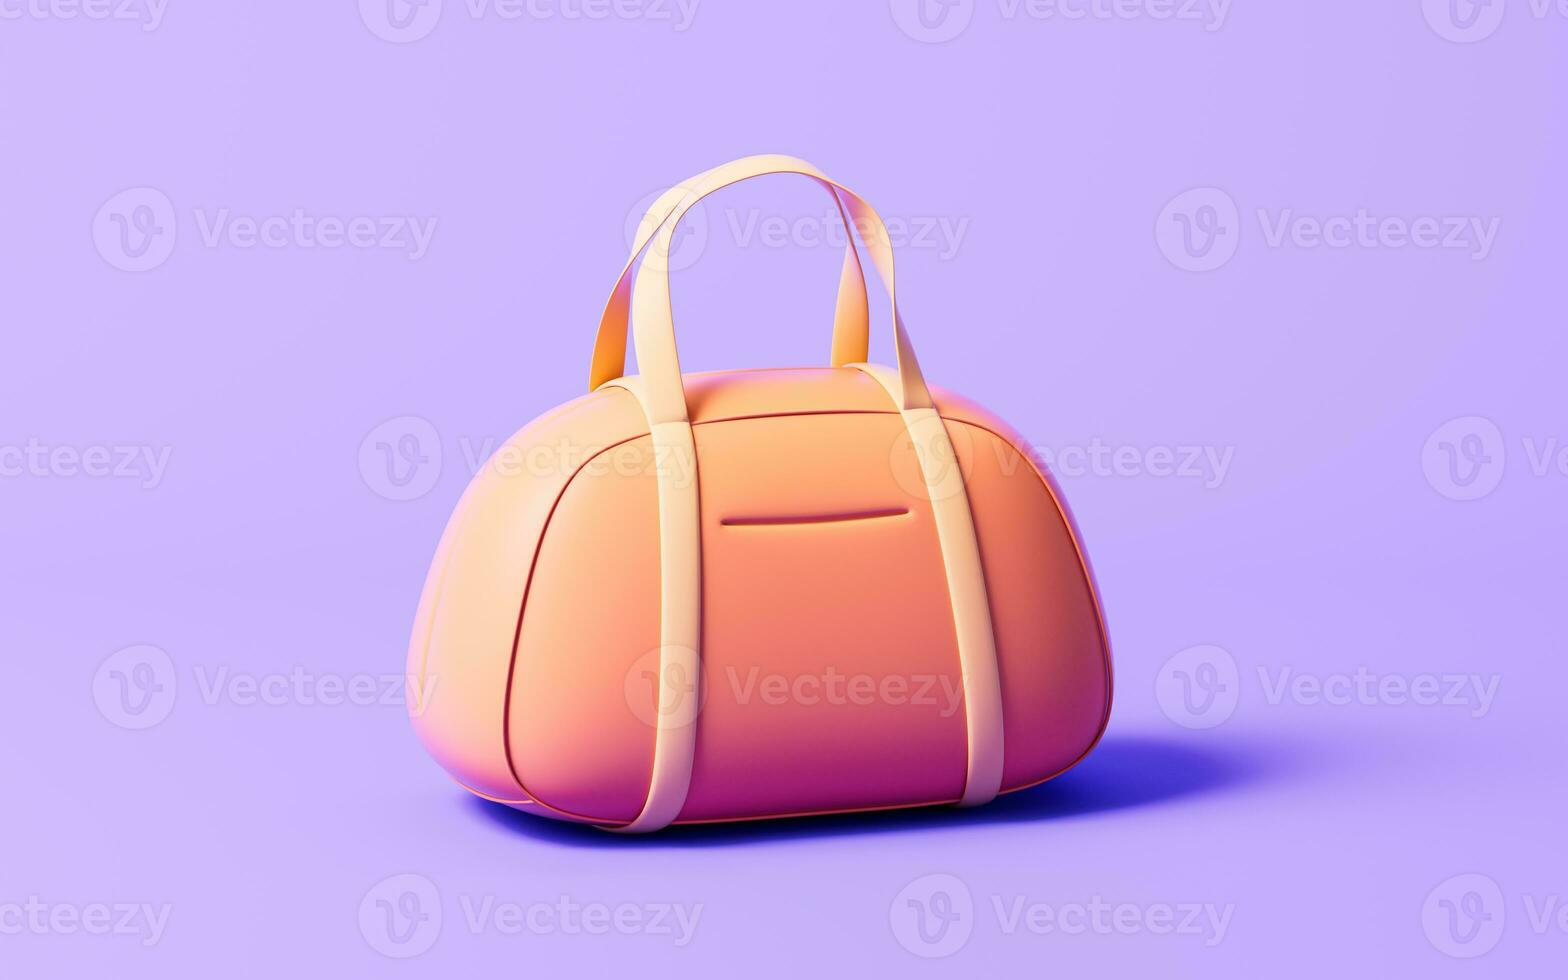 Orange bag with cartoon style, 3d rendering. photo